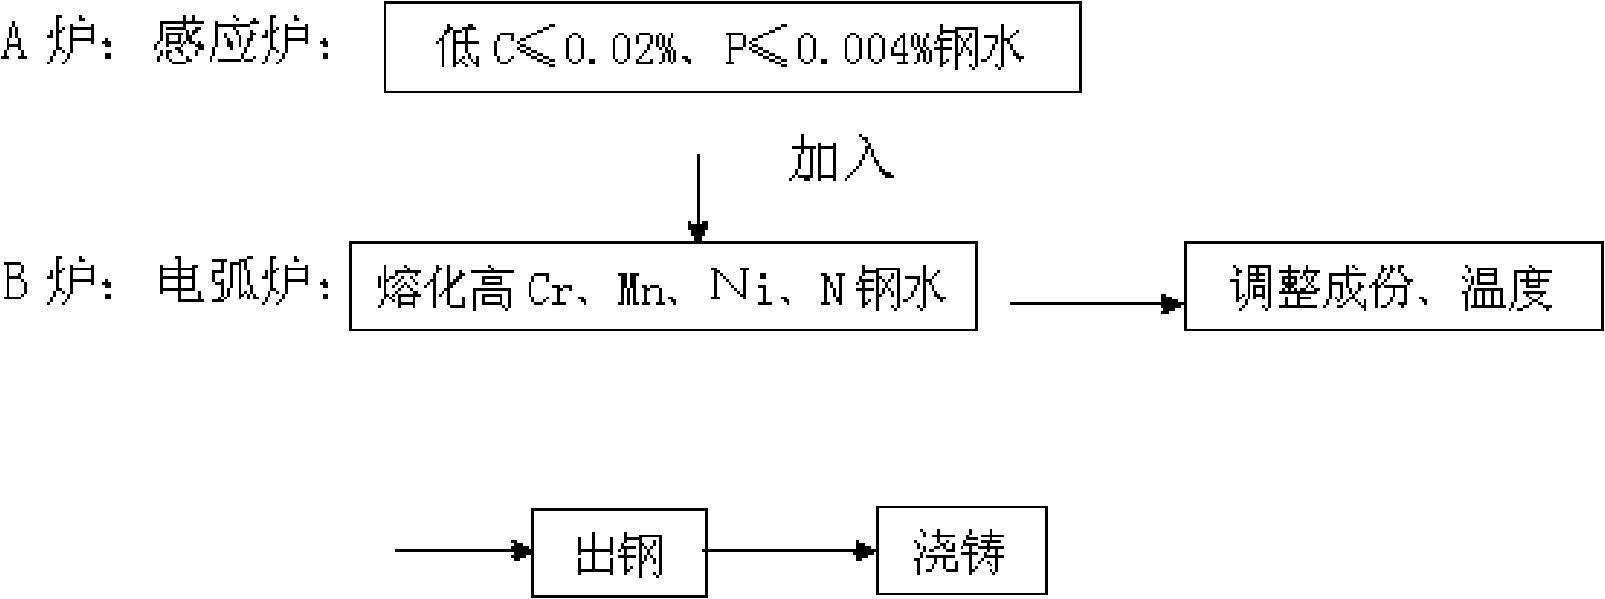 Method for smelting high-nitrogen steel